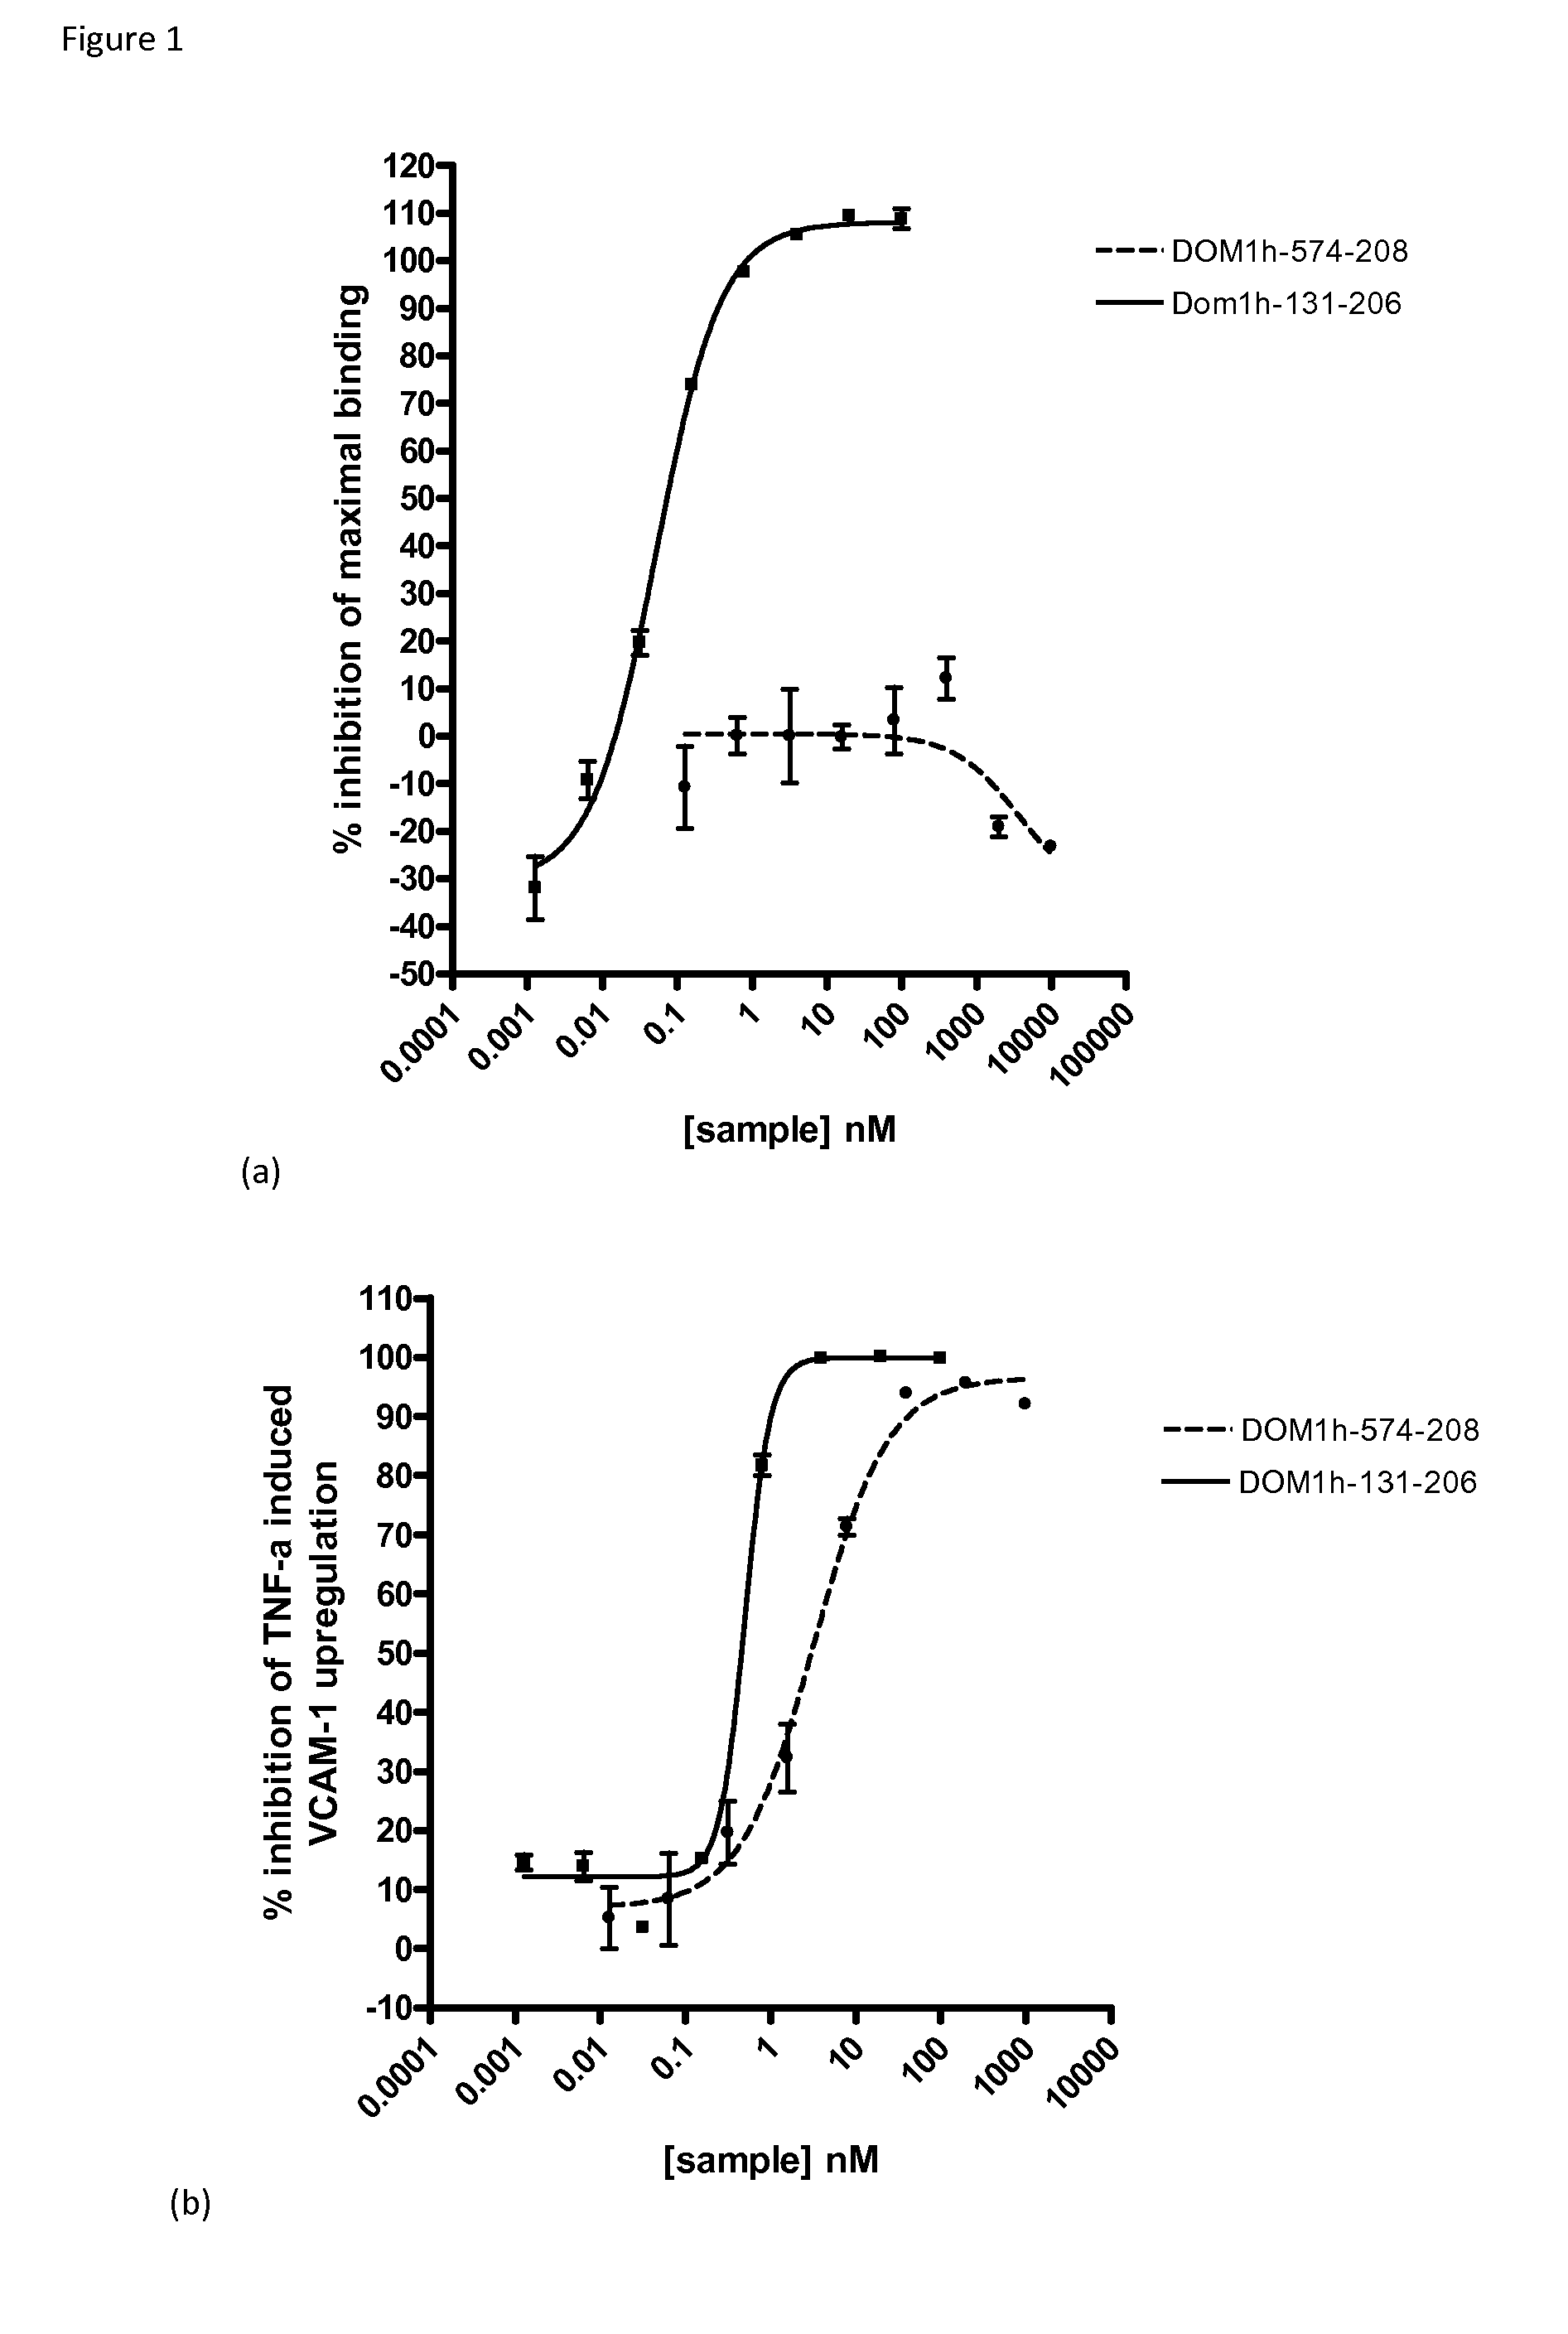 Tumour necrosis factor receptor 1 antagonists